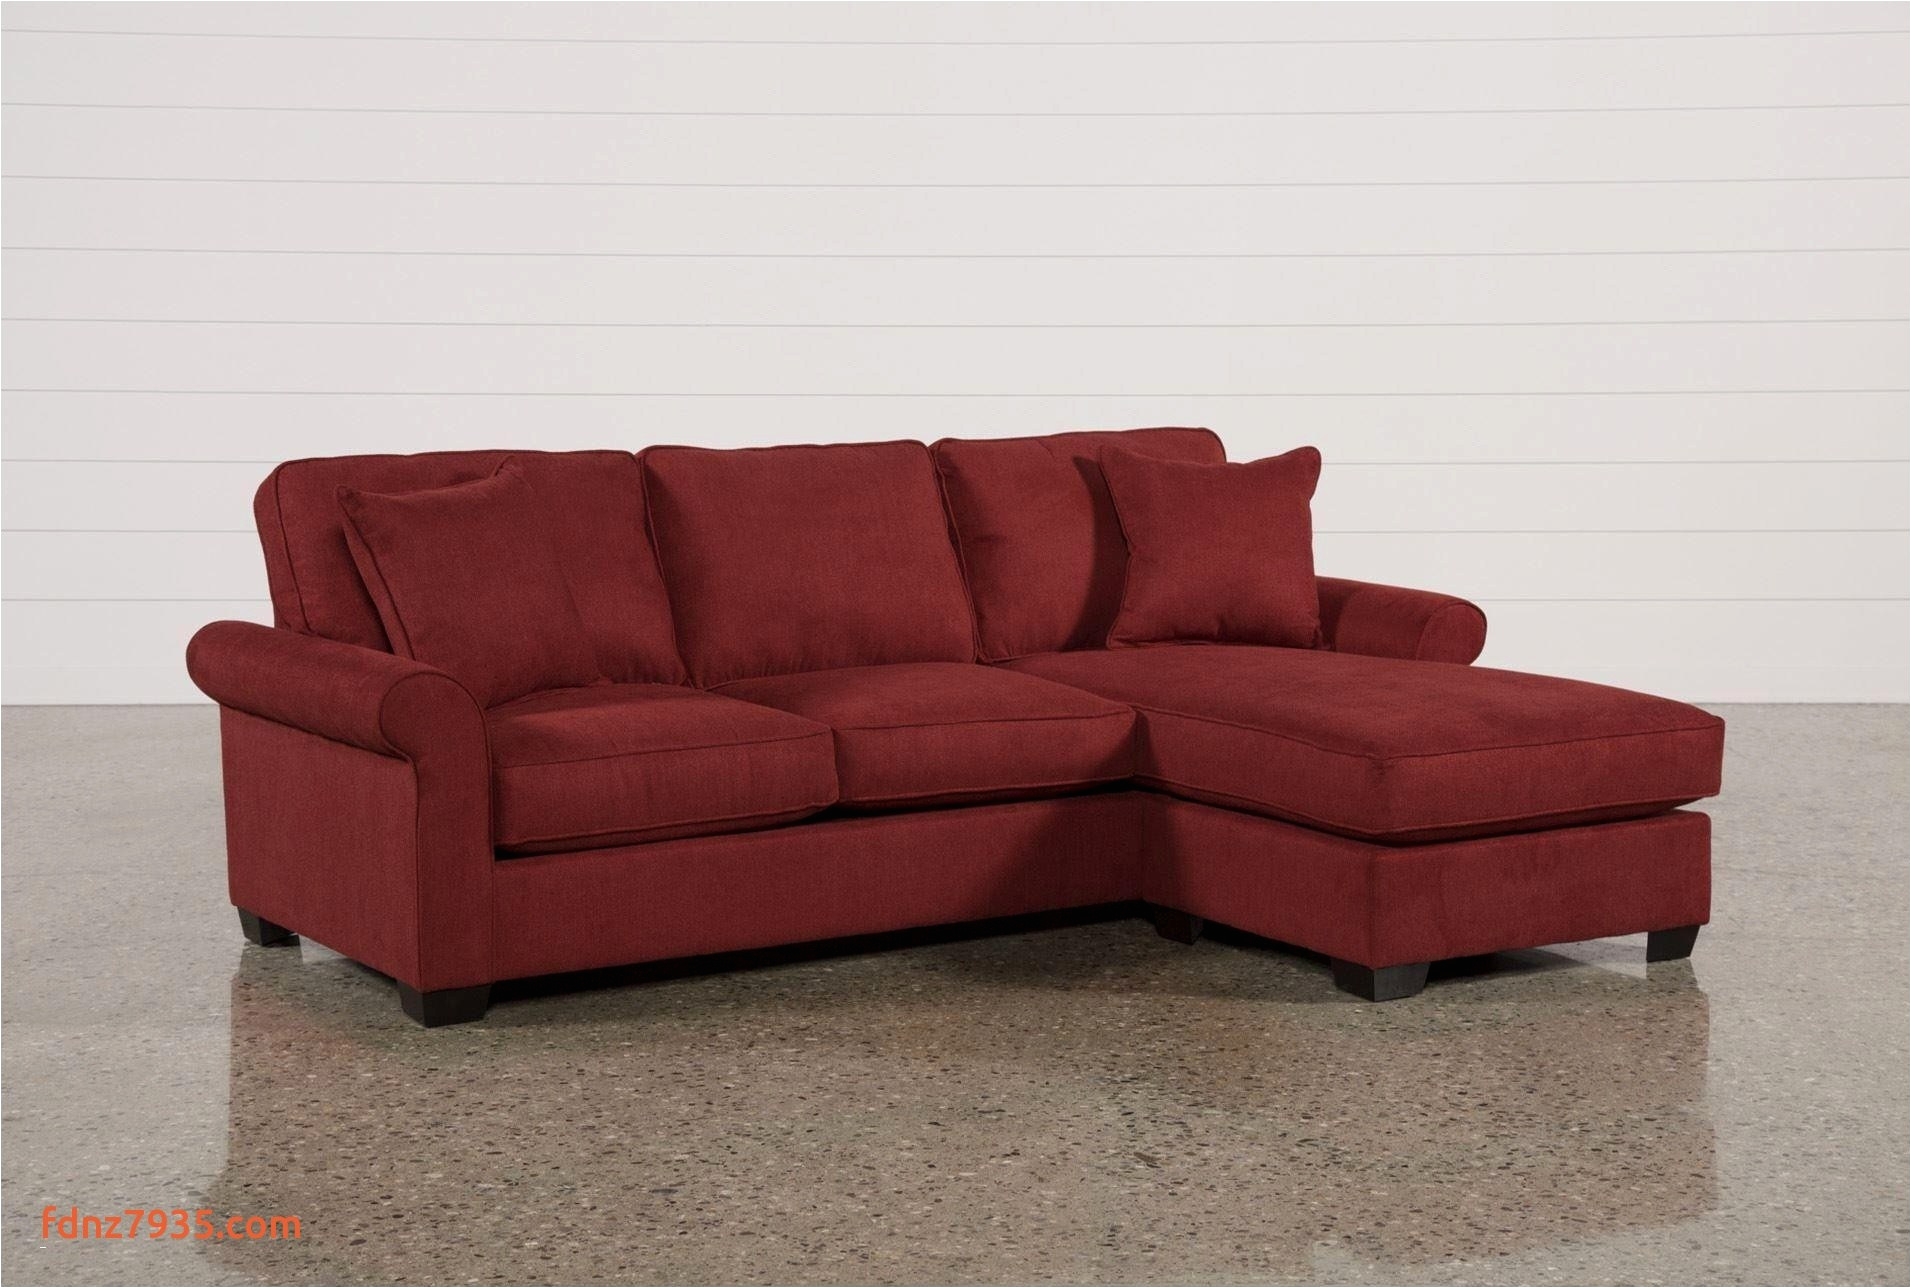 used rv furniture craigslist new used sleeper sofa fresh sofa design photos of 40 new